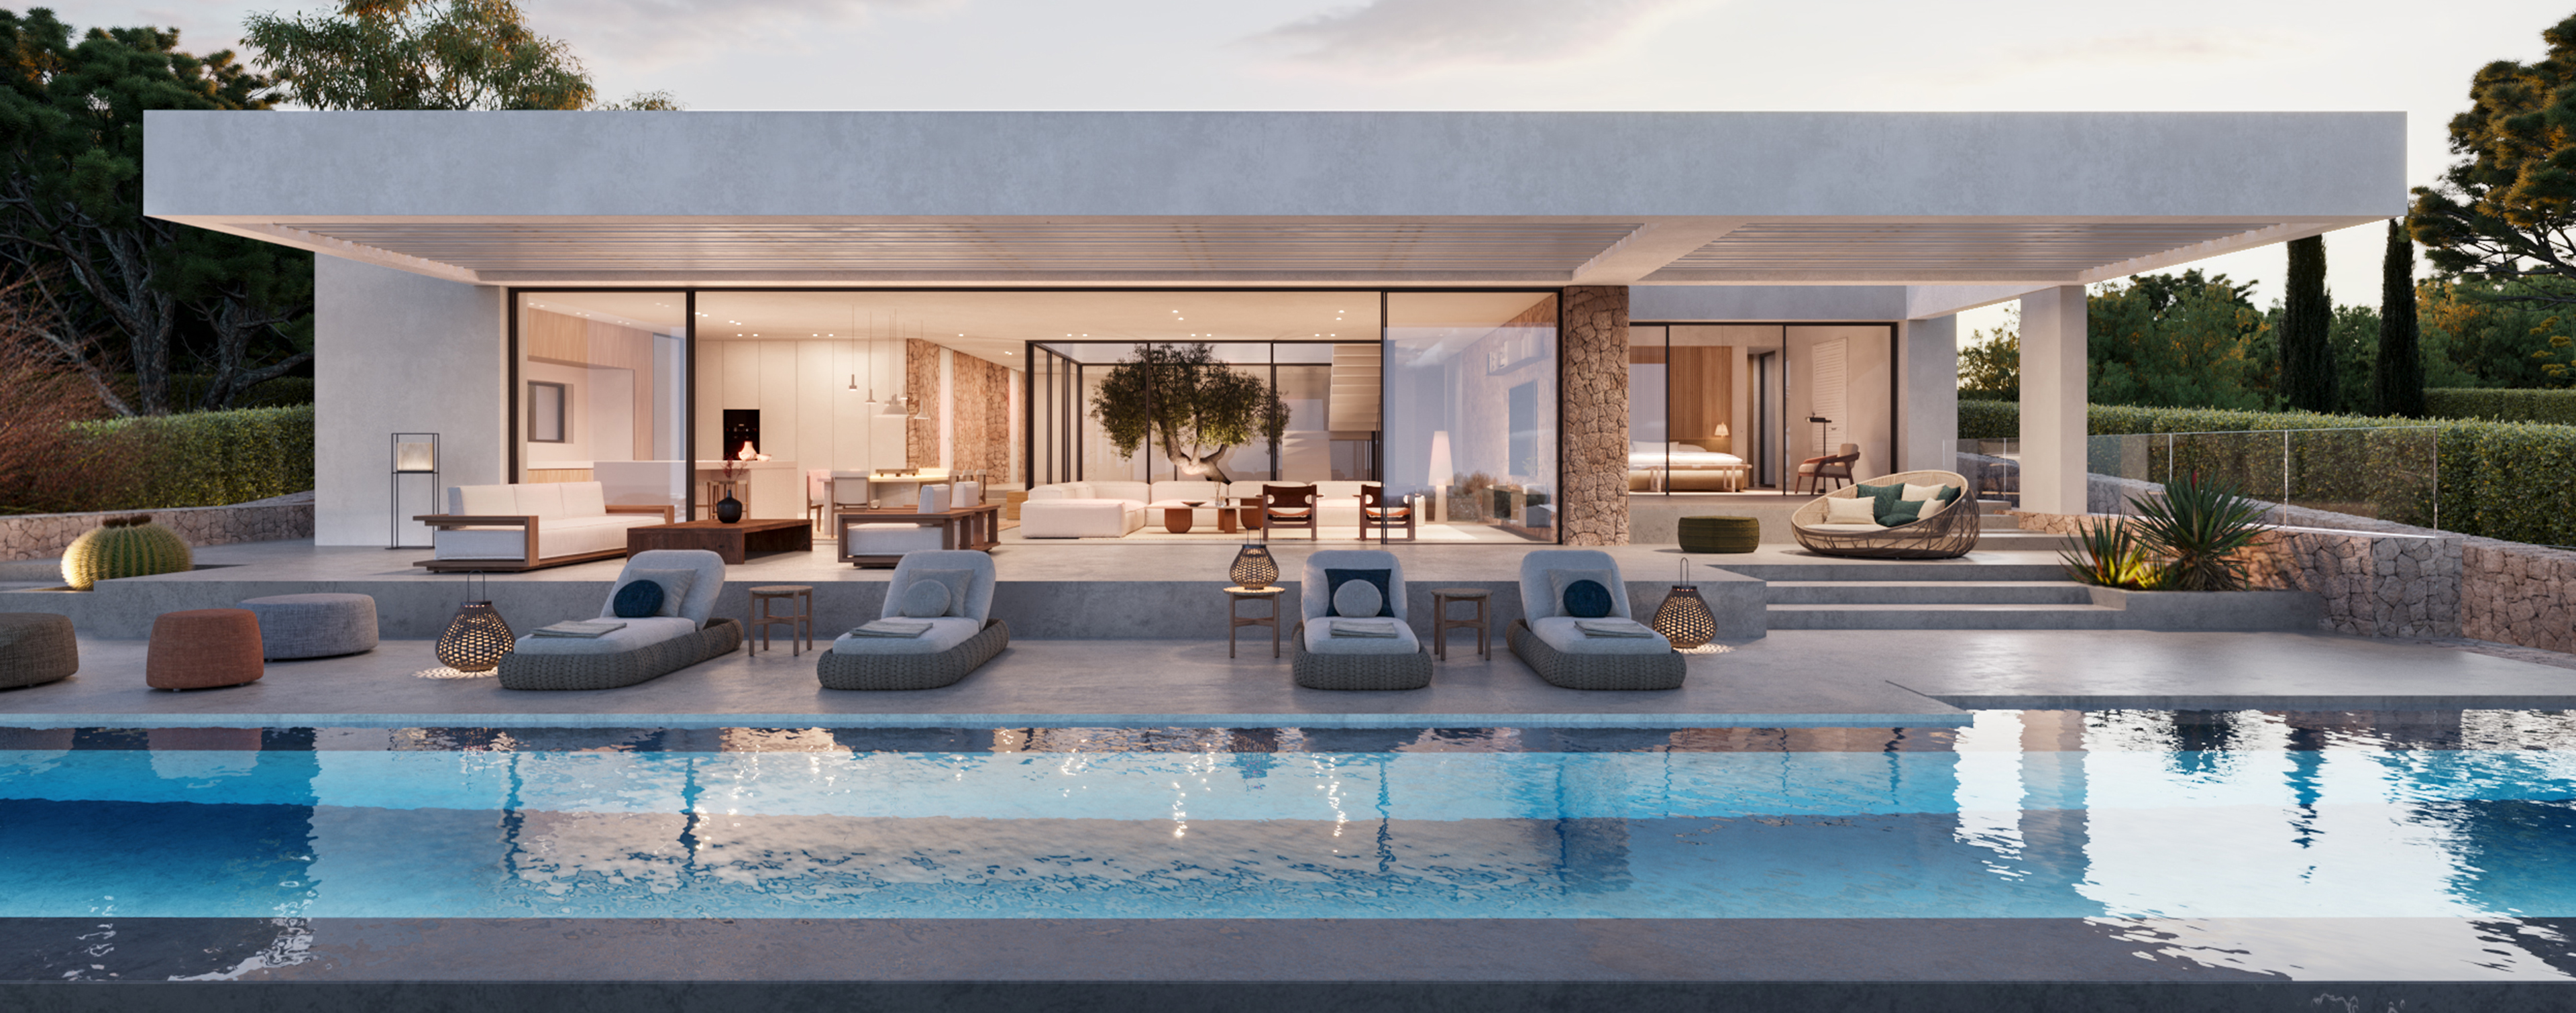 luv studio luxury architects menorca gambi house IMG 02 - LUV Studio - Architecture & Design - Barcelona